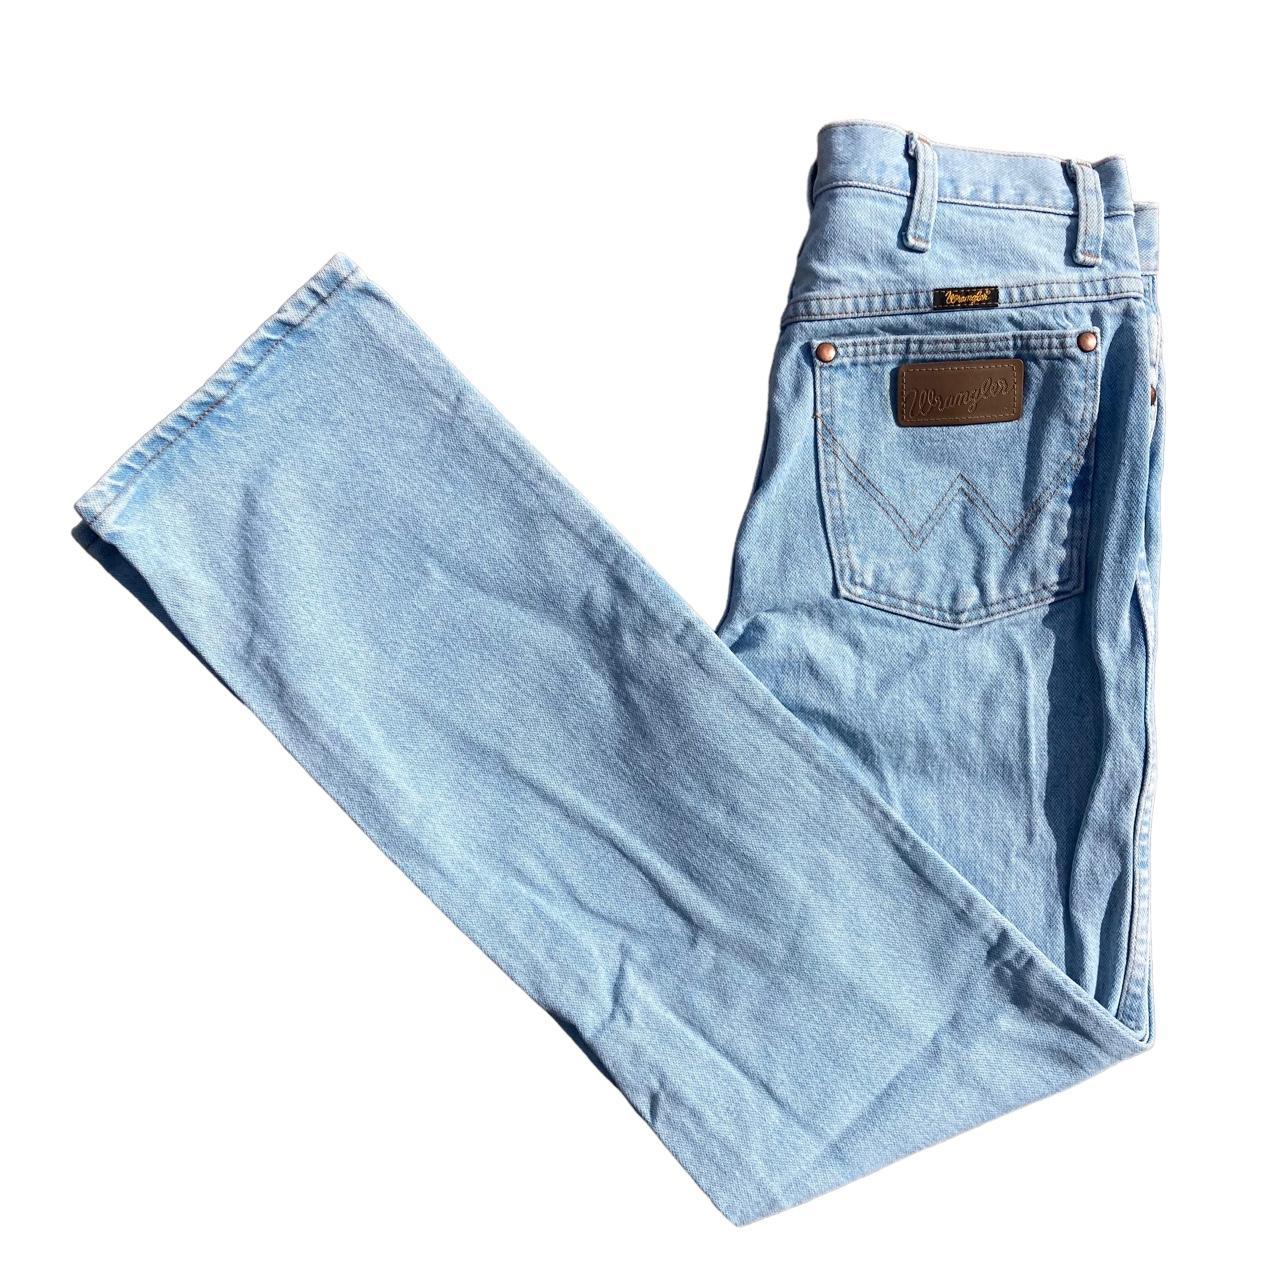 Zuivelproducten Melodieus Graden Celsius Wrangler Men's Blue and White Jeans | Depop